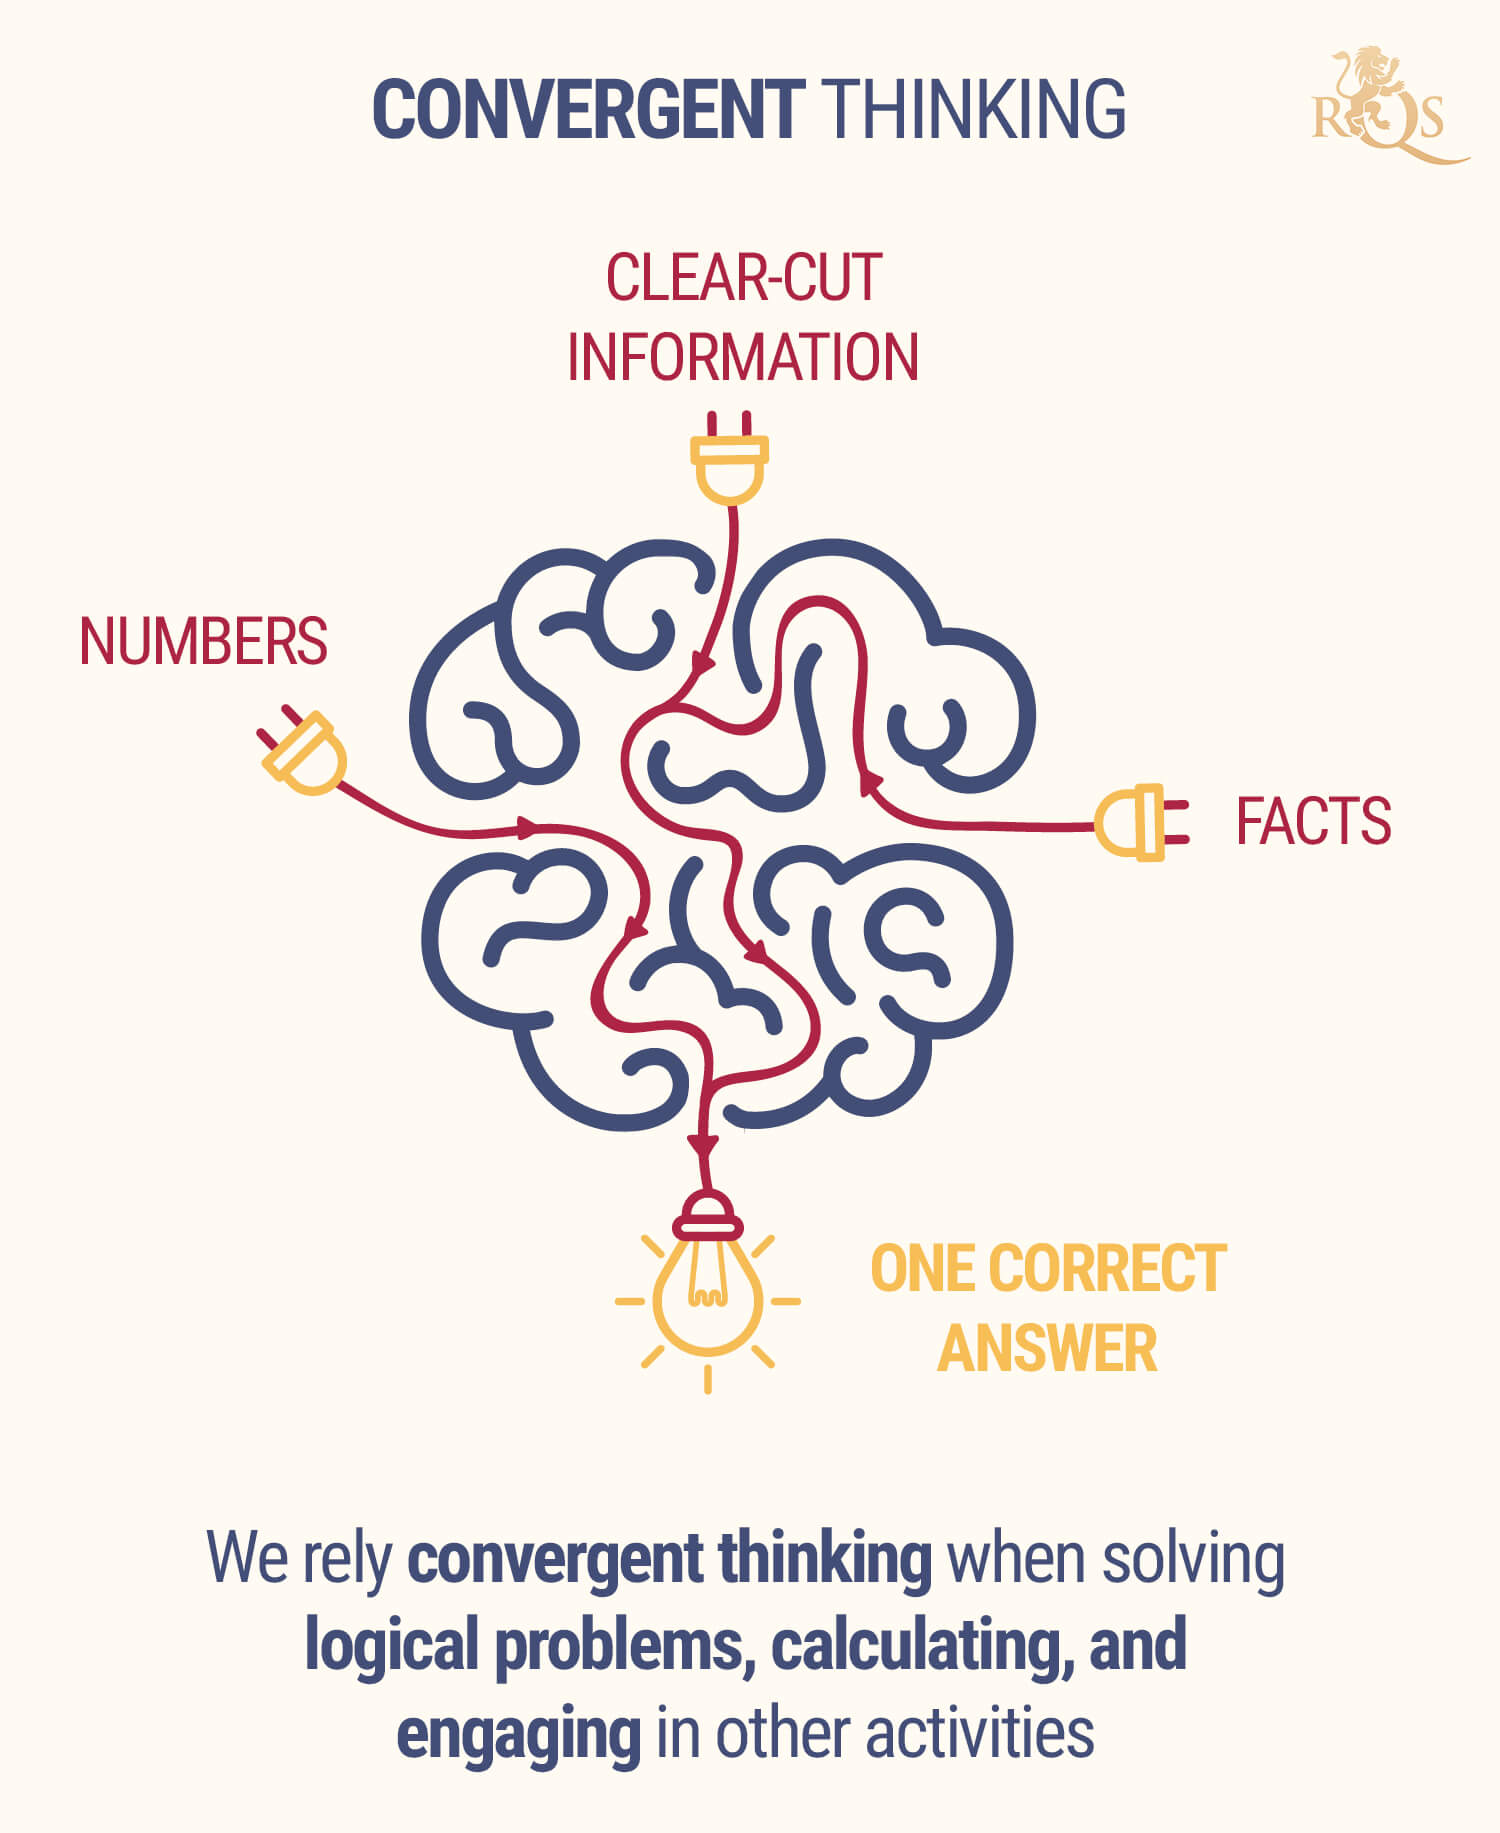 Convergent thinking